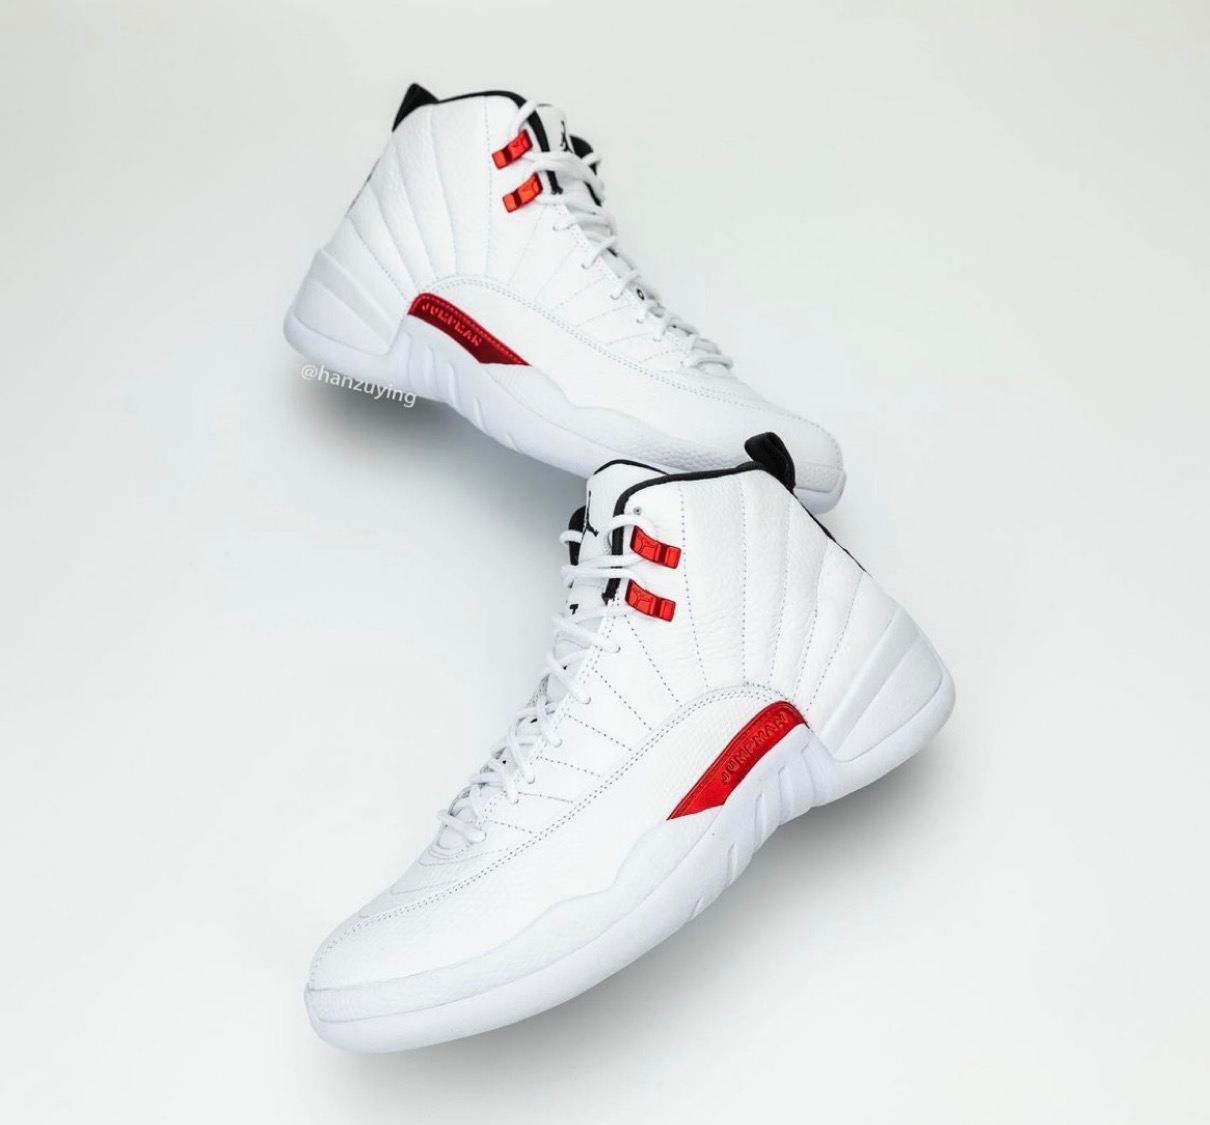 Nike】Air Jordan 12 Retro “Twist”が国内7月24日に発売予定 | UP TO DATE